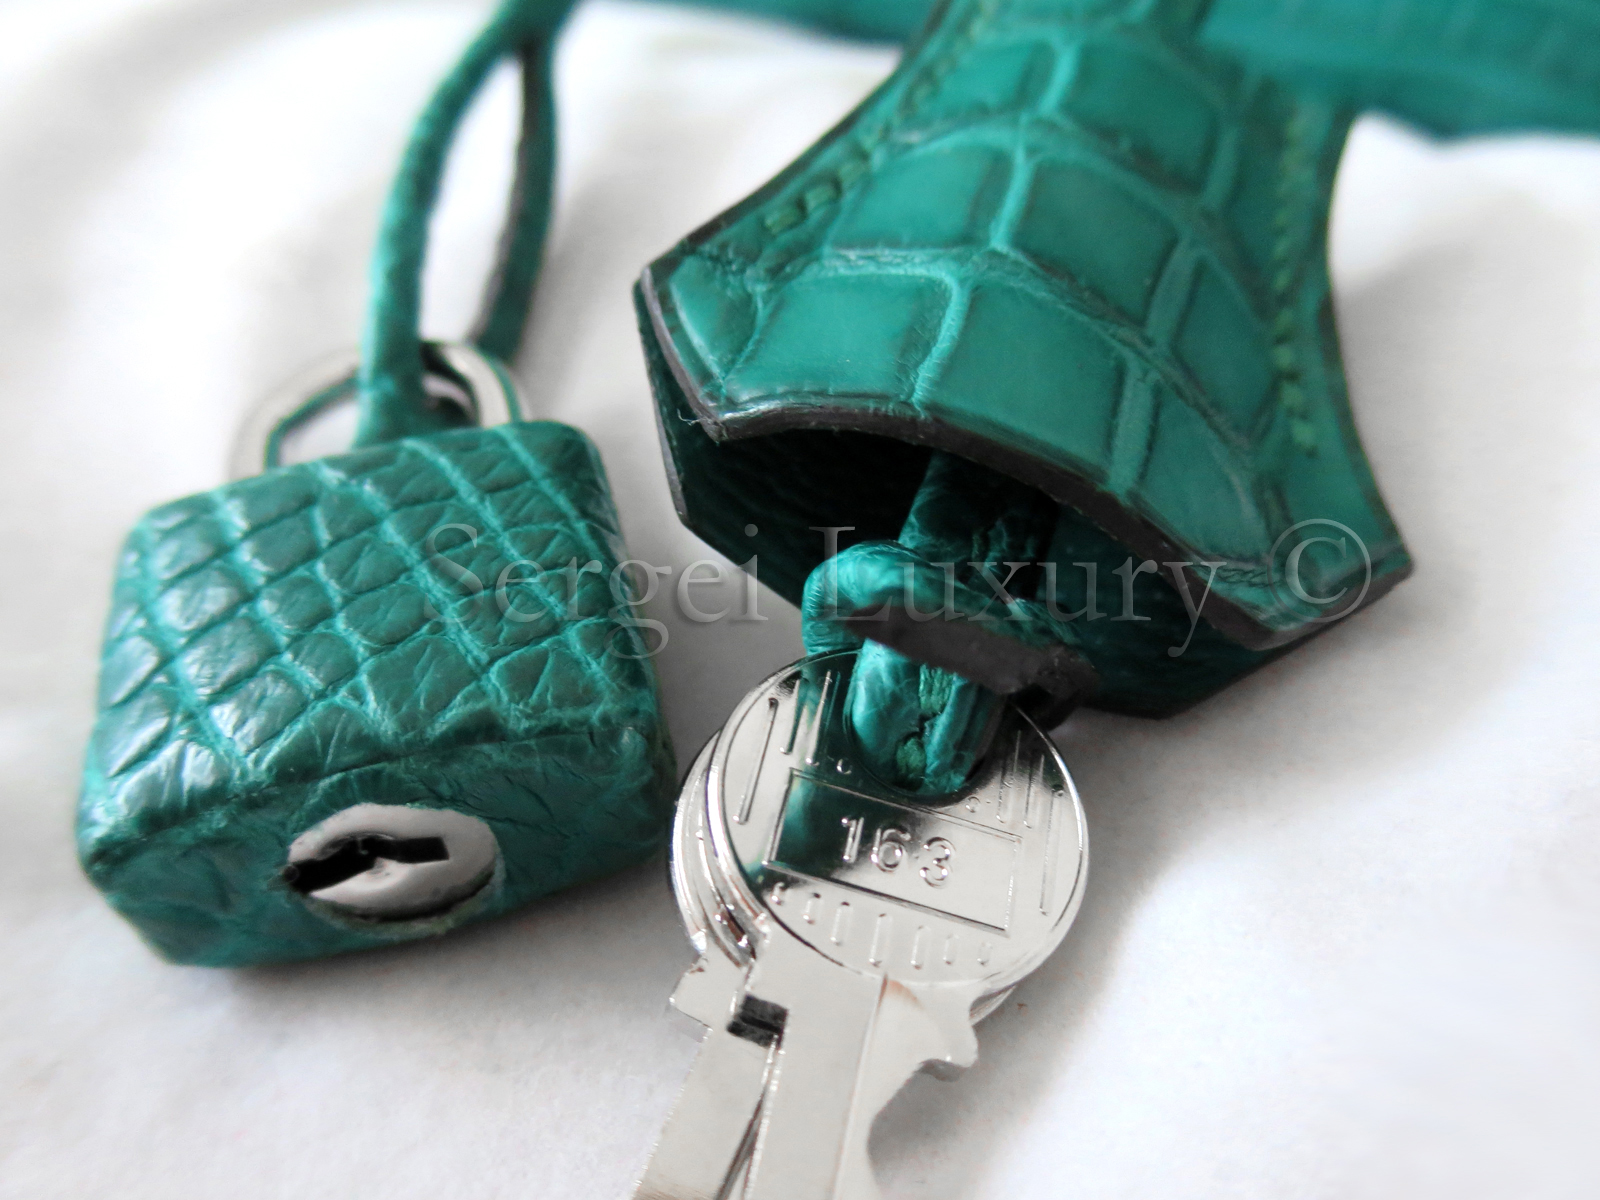 MIGHTYCHIC • HERMÈS Birkin 30 Bag Limited Edition Patchwork Emerald Green  Crocodile Accent 